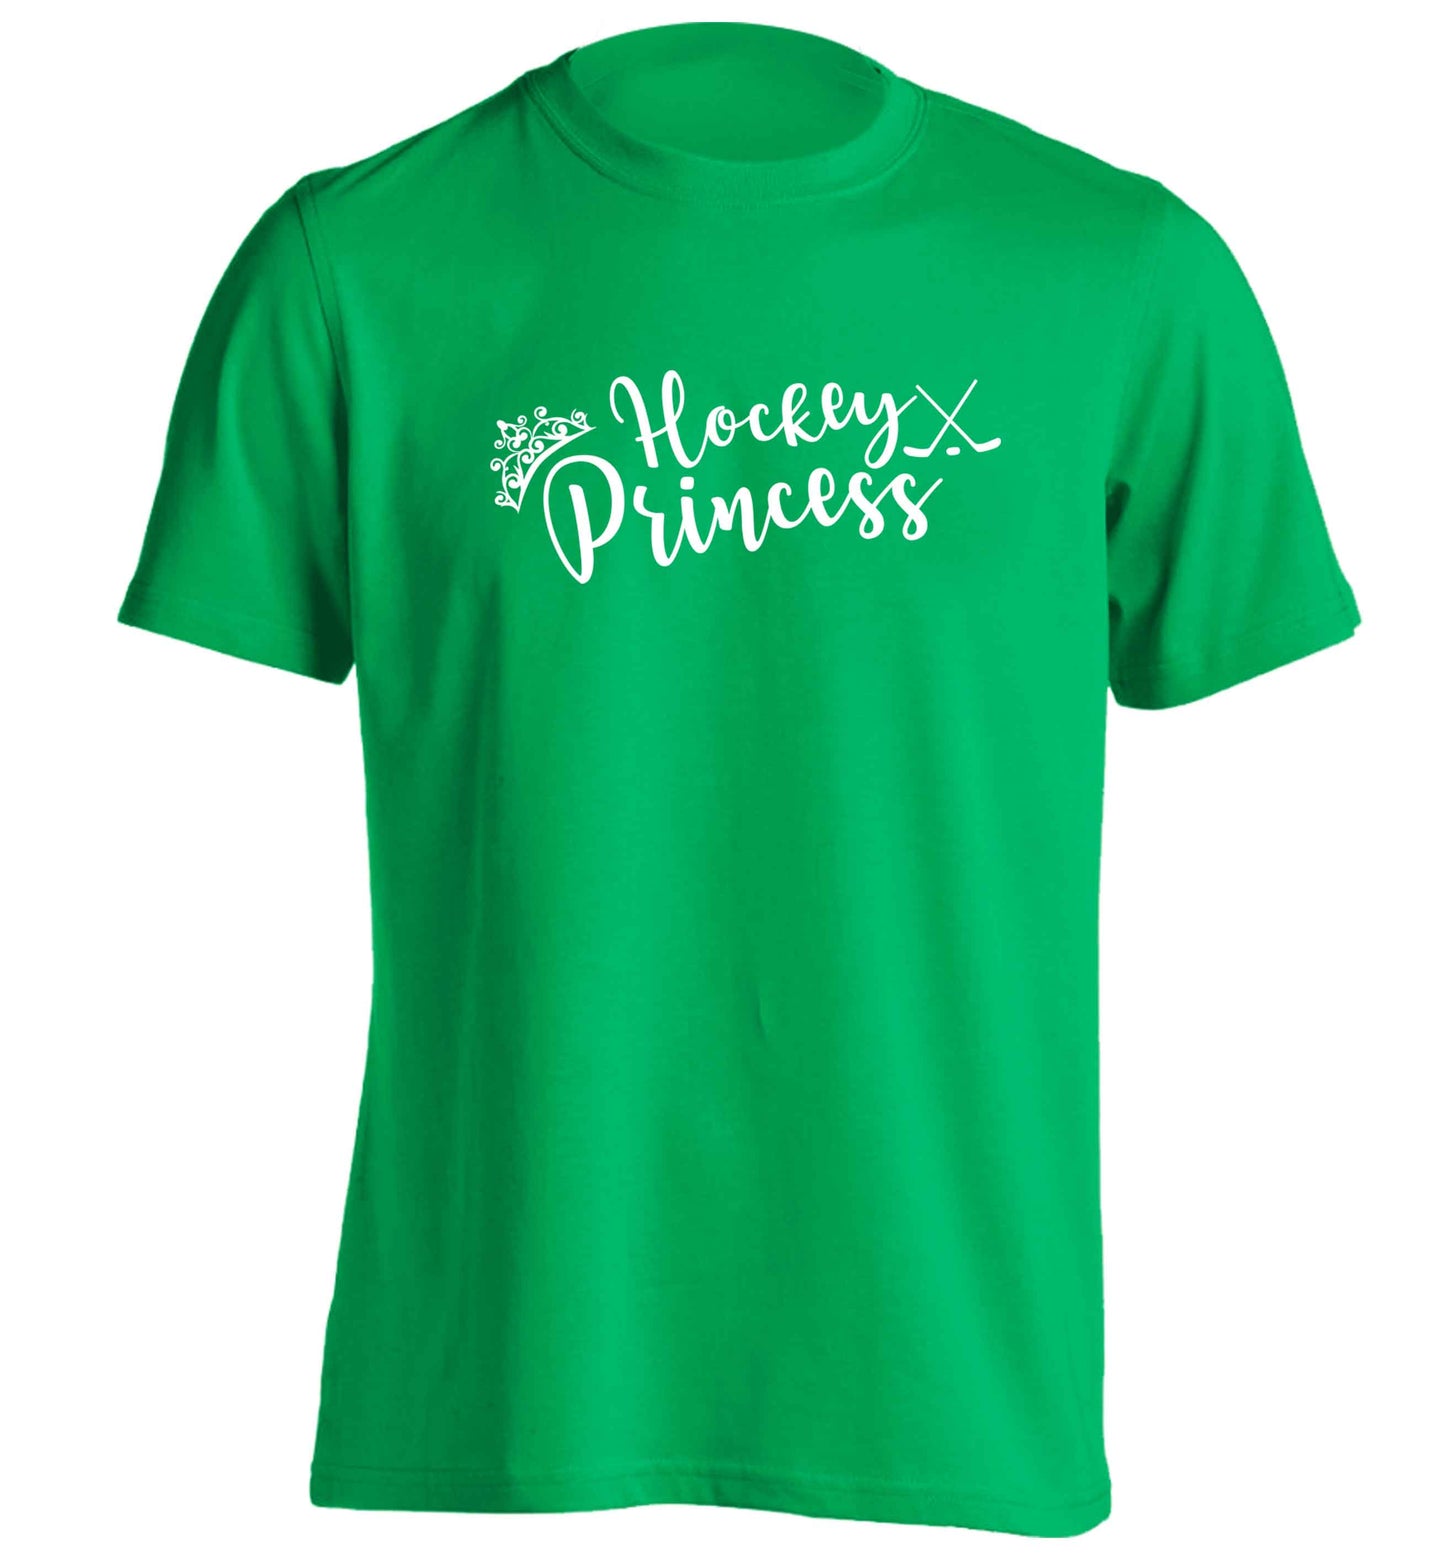 Hockey princess adults unisex green Tshirt 2XL